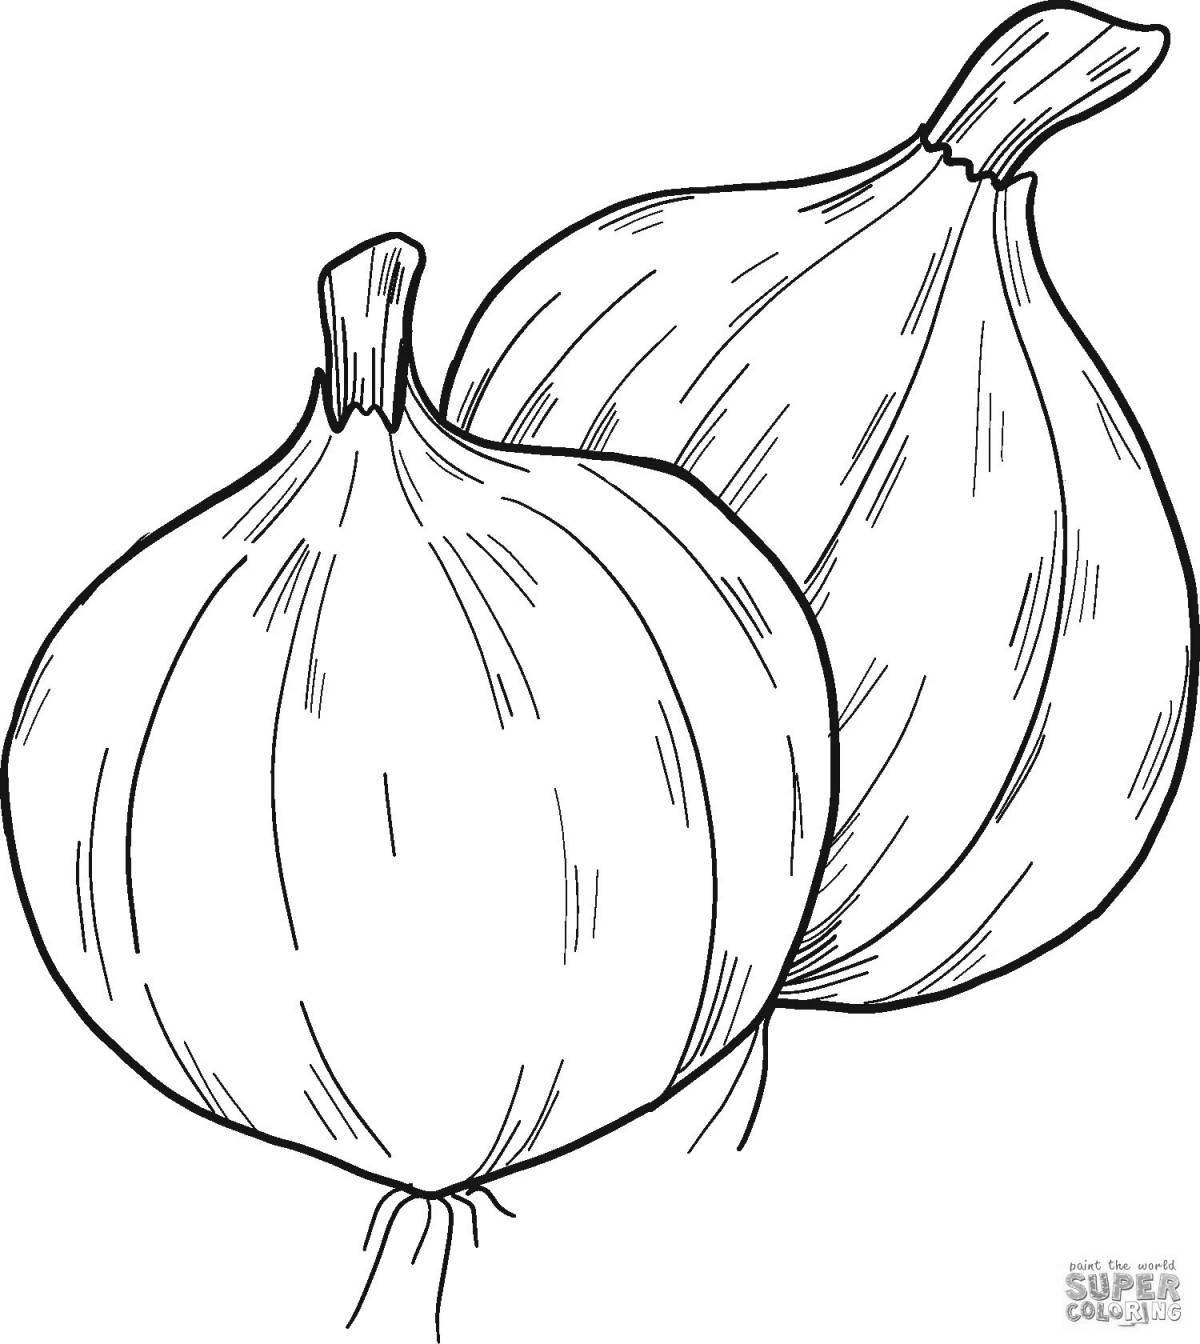 Green onion #1